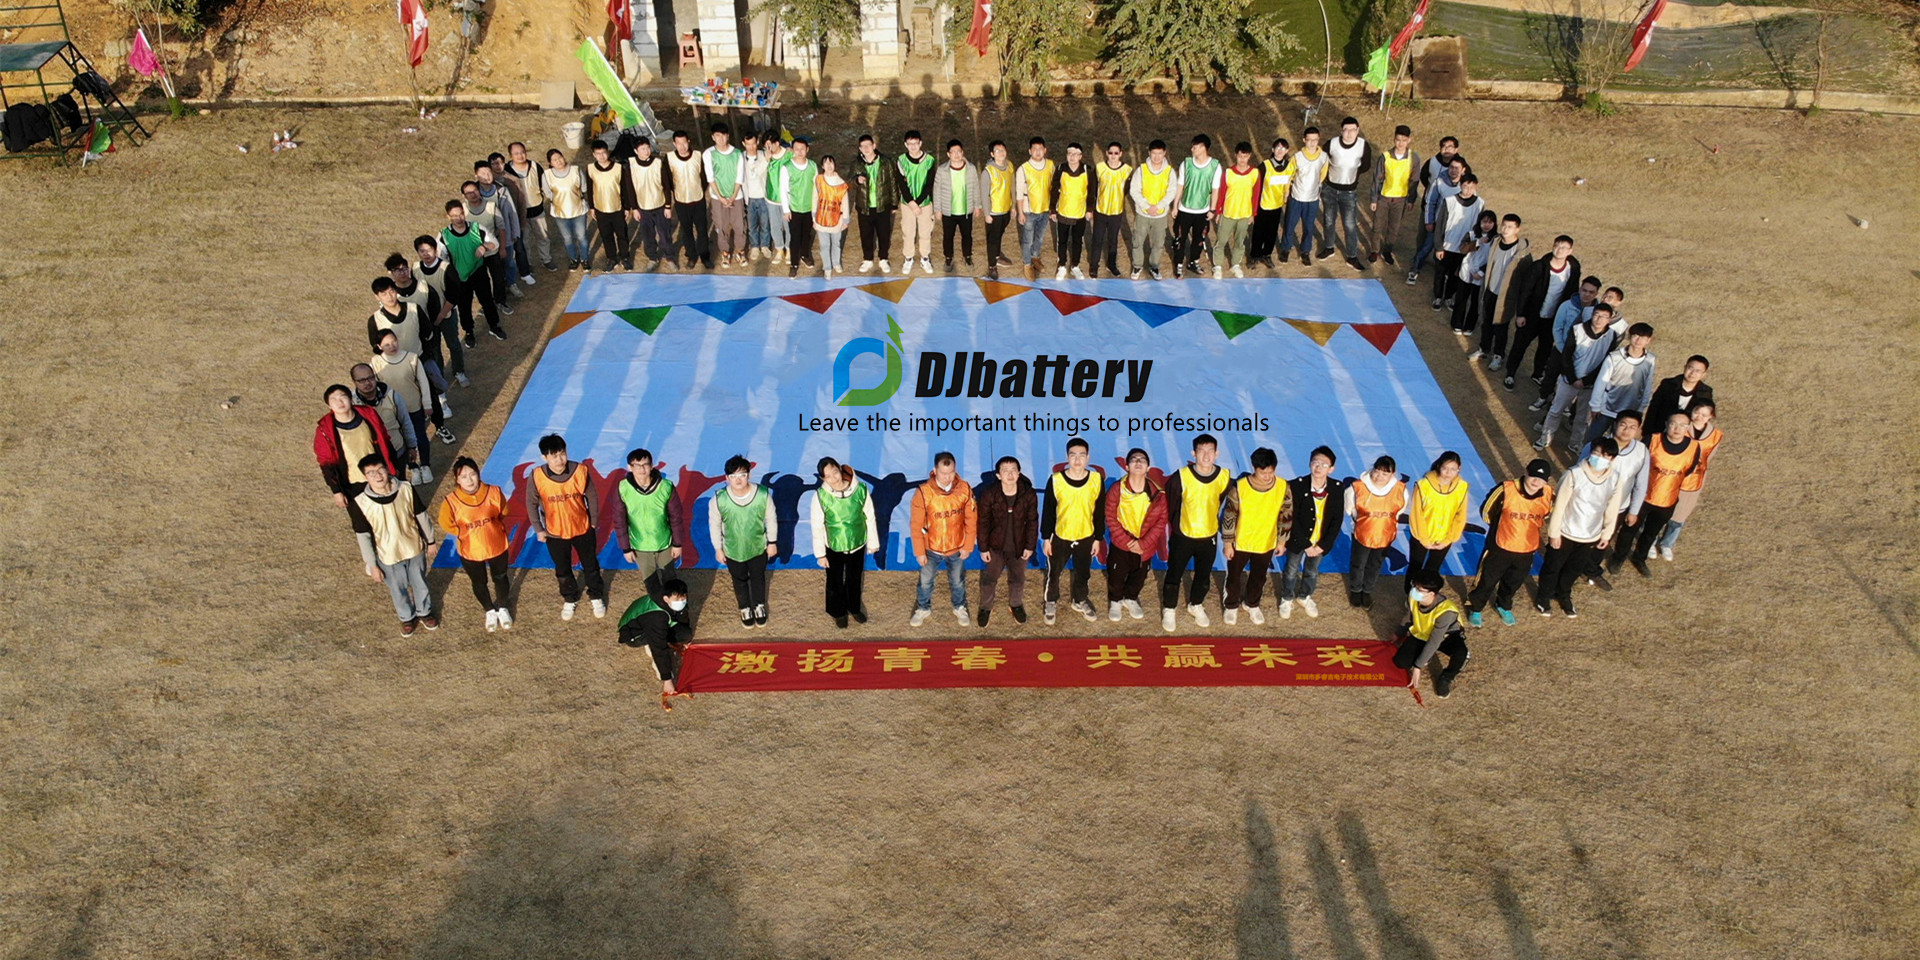 DJbattery| Lithium battery manufacturer